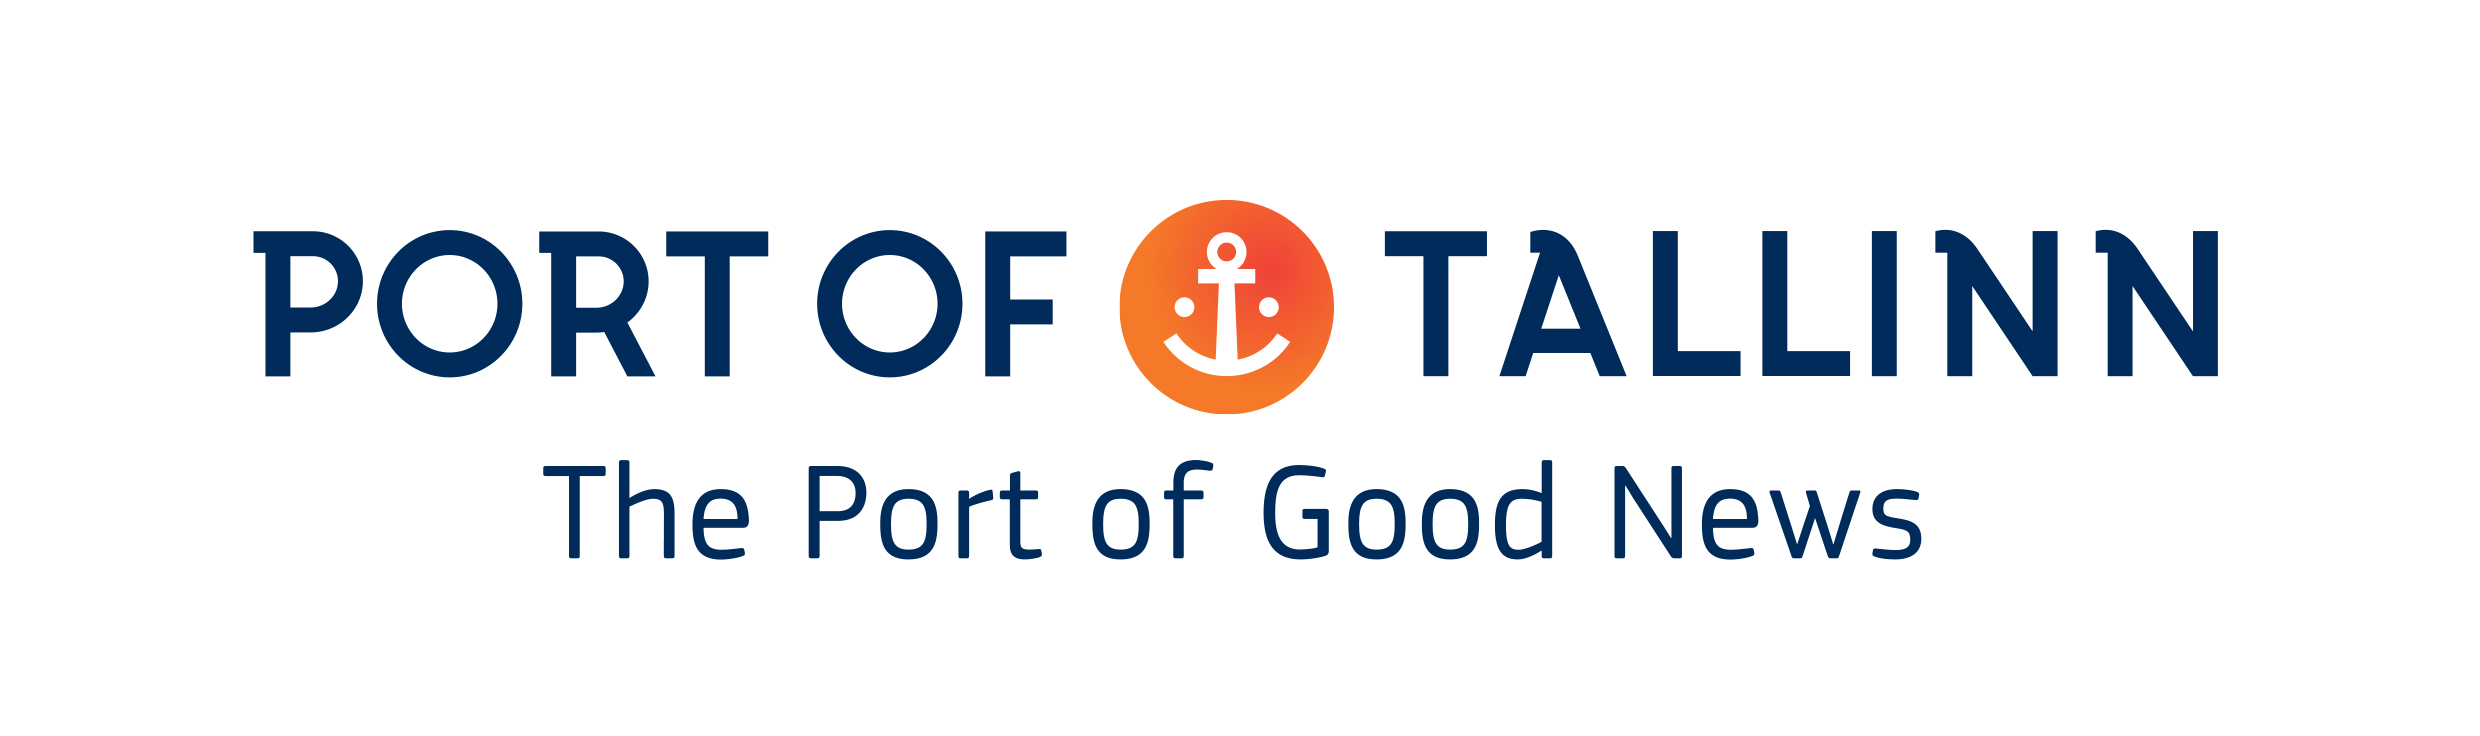 logo-port-of-tallinn.png